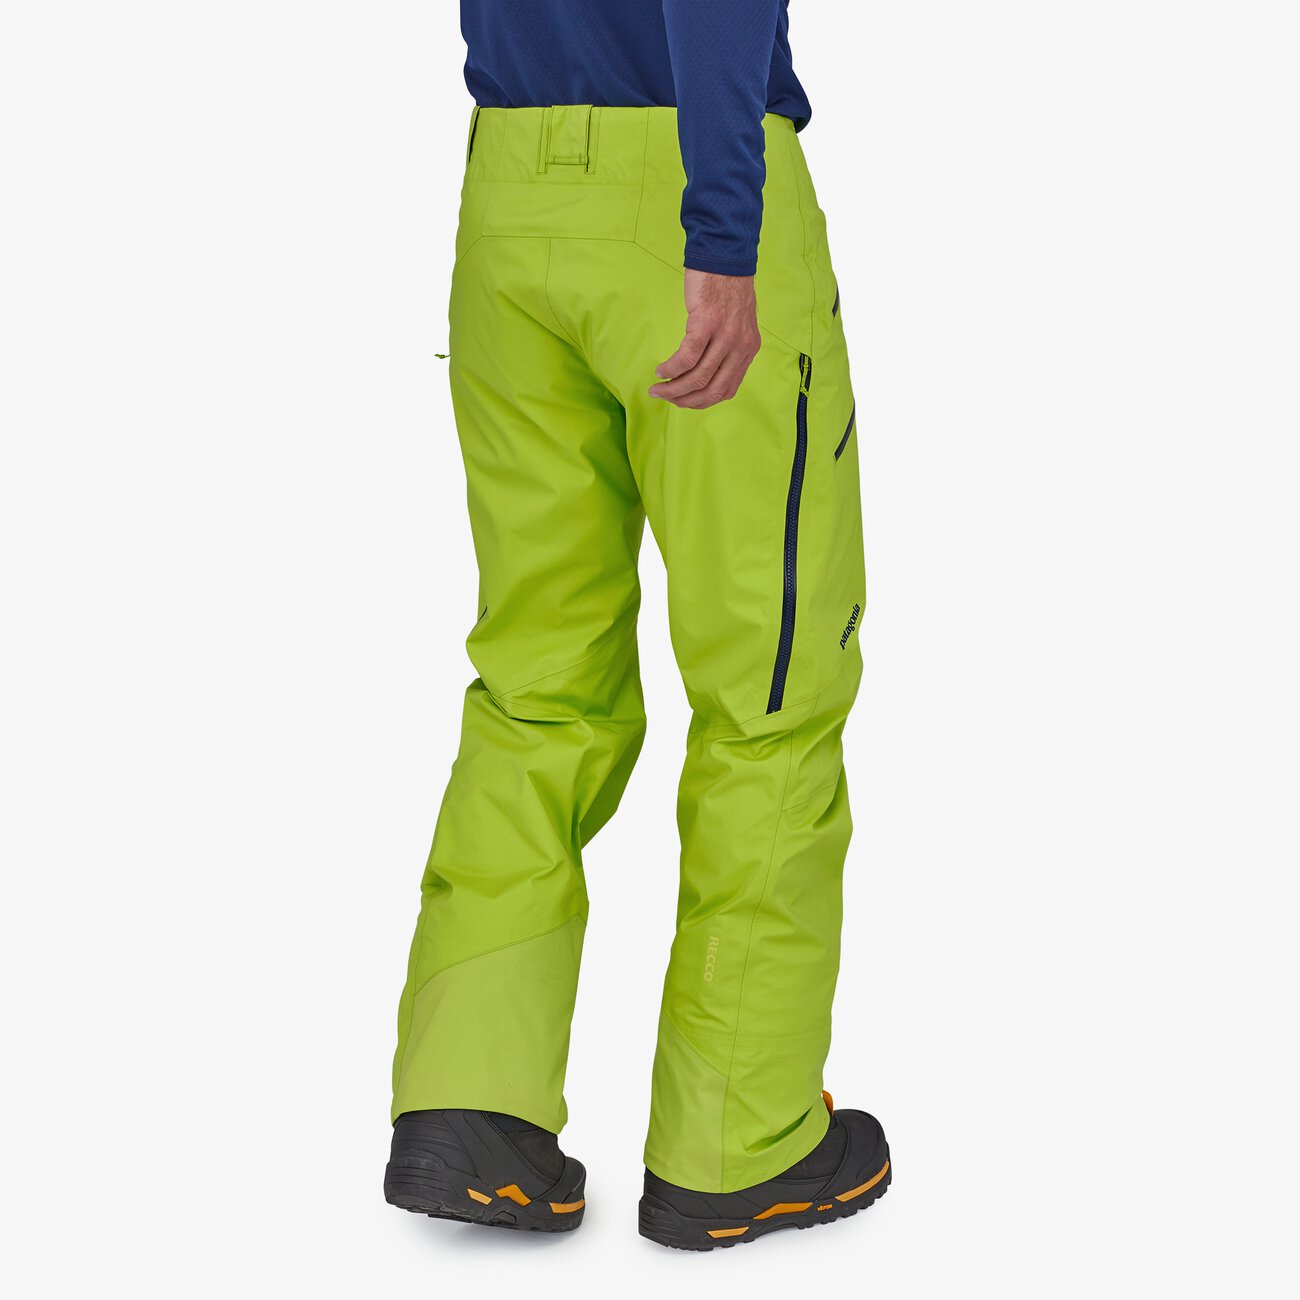 Patagonia Men's PowSlayer Ski/Snowboard Pants